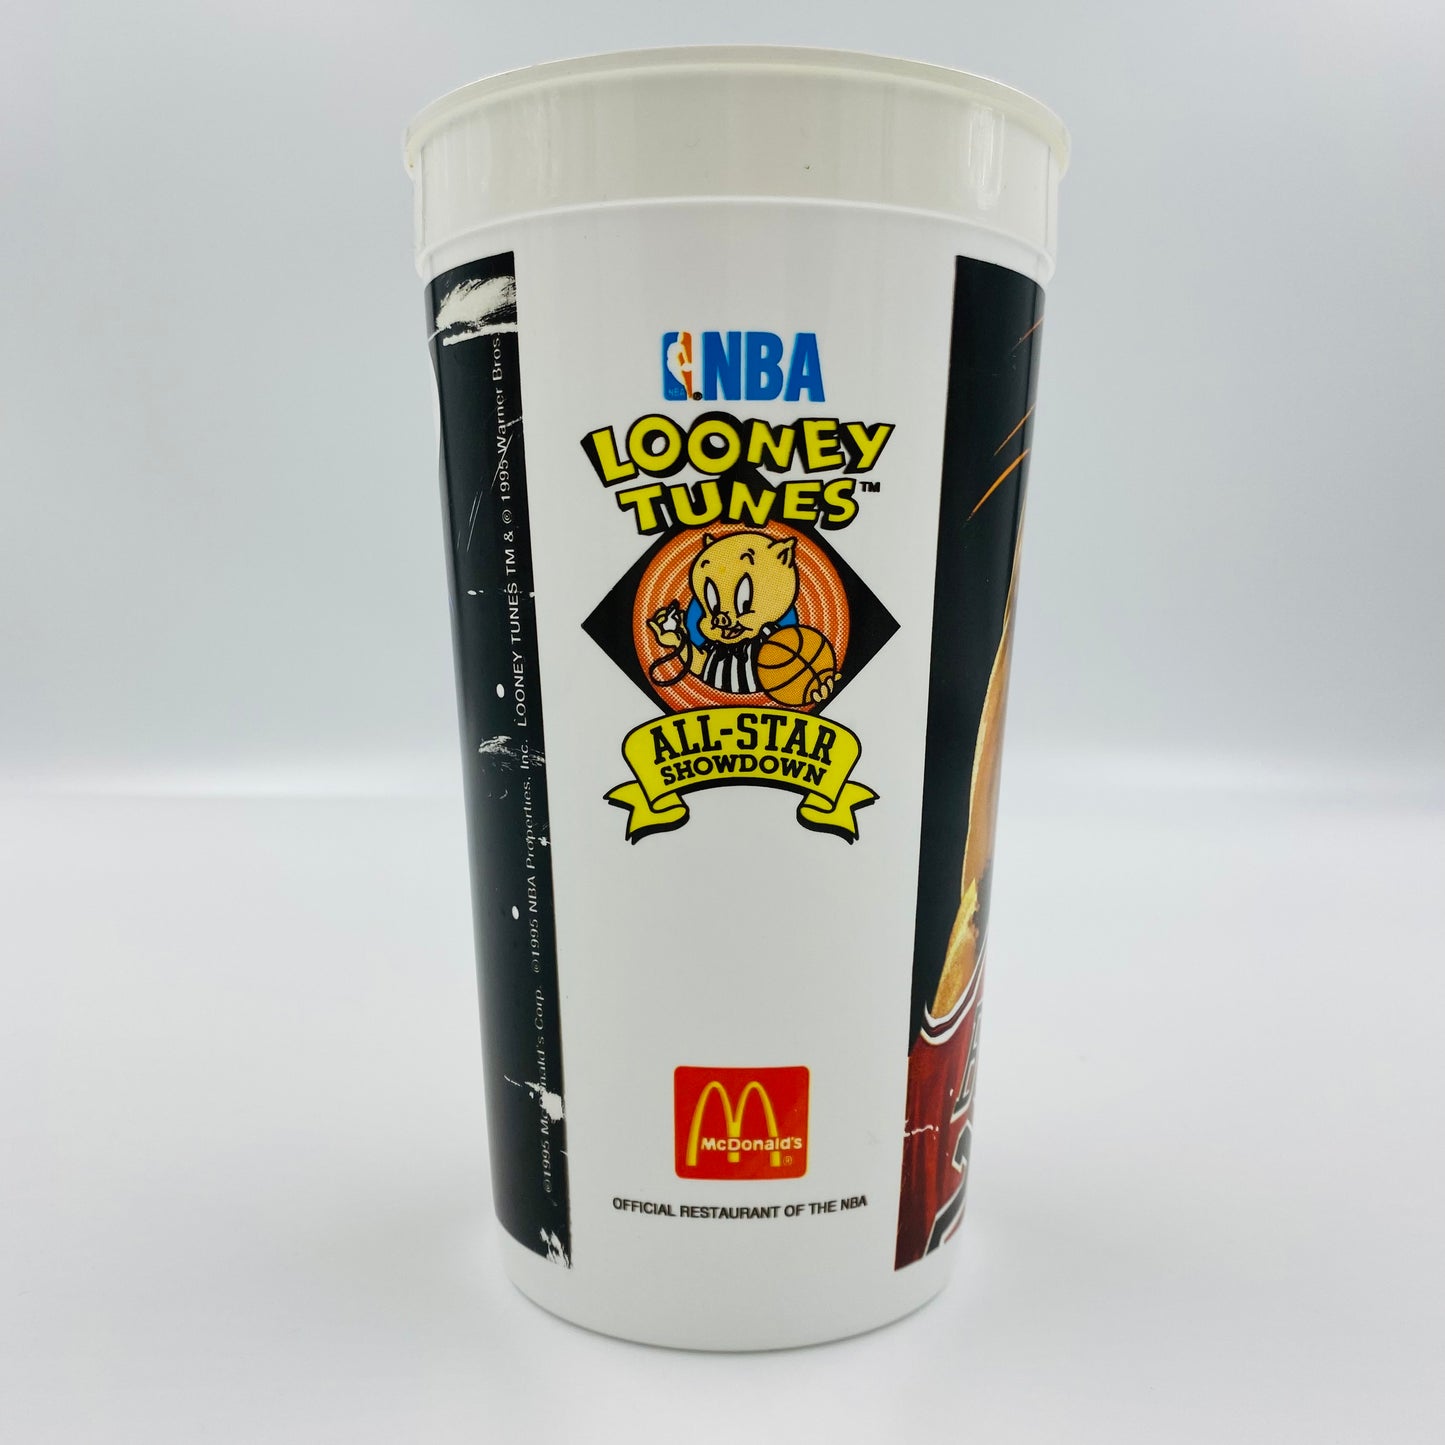 NBA Looney Tunes All-Star Showdown Michael Jordan & Bugs Bunny 32oz plastic cup (1995) McDonald's